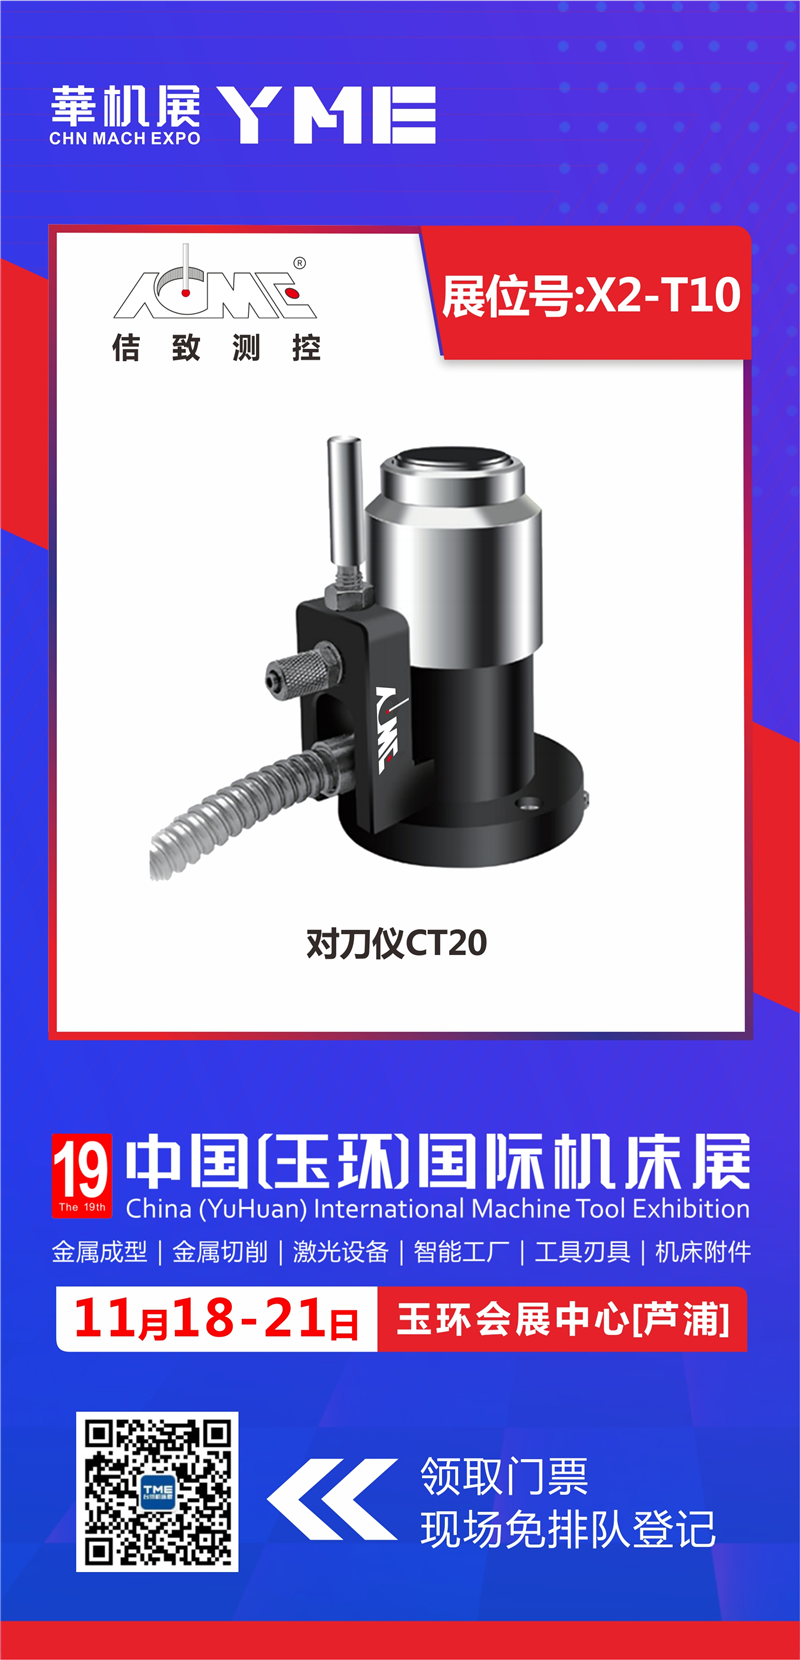 Invitation to the 19th China (Yuhuan) International Machine Tool Exhibition 2022 (1)